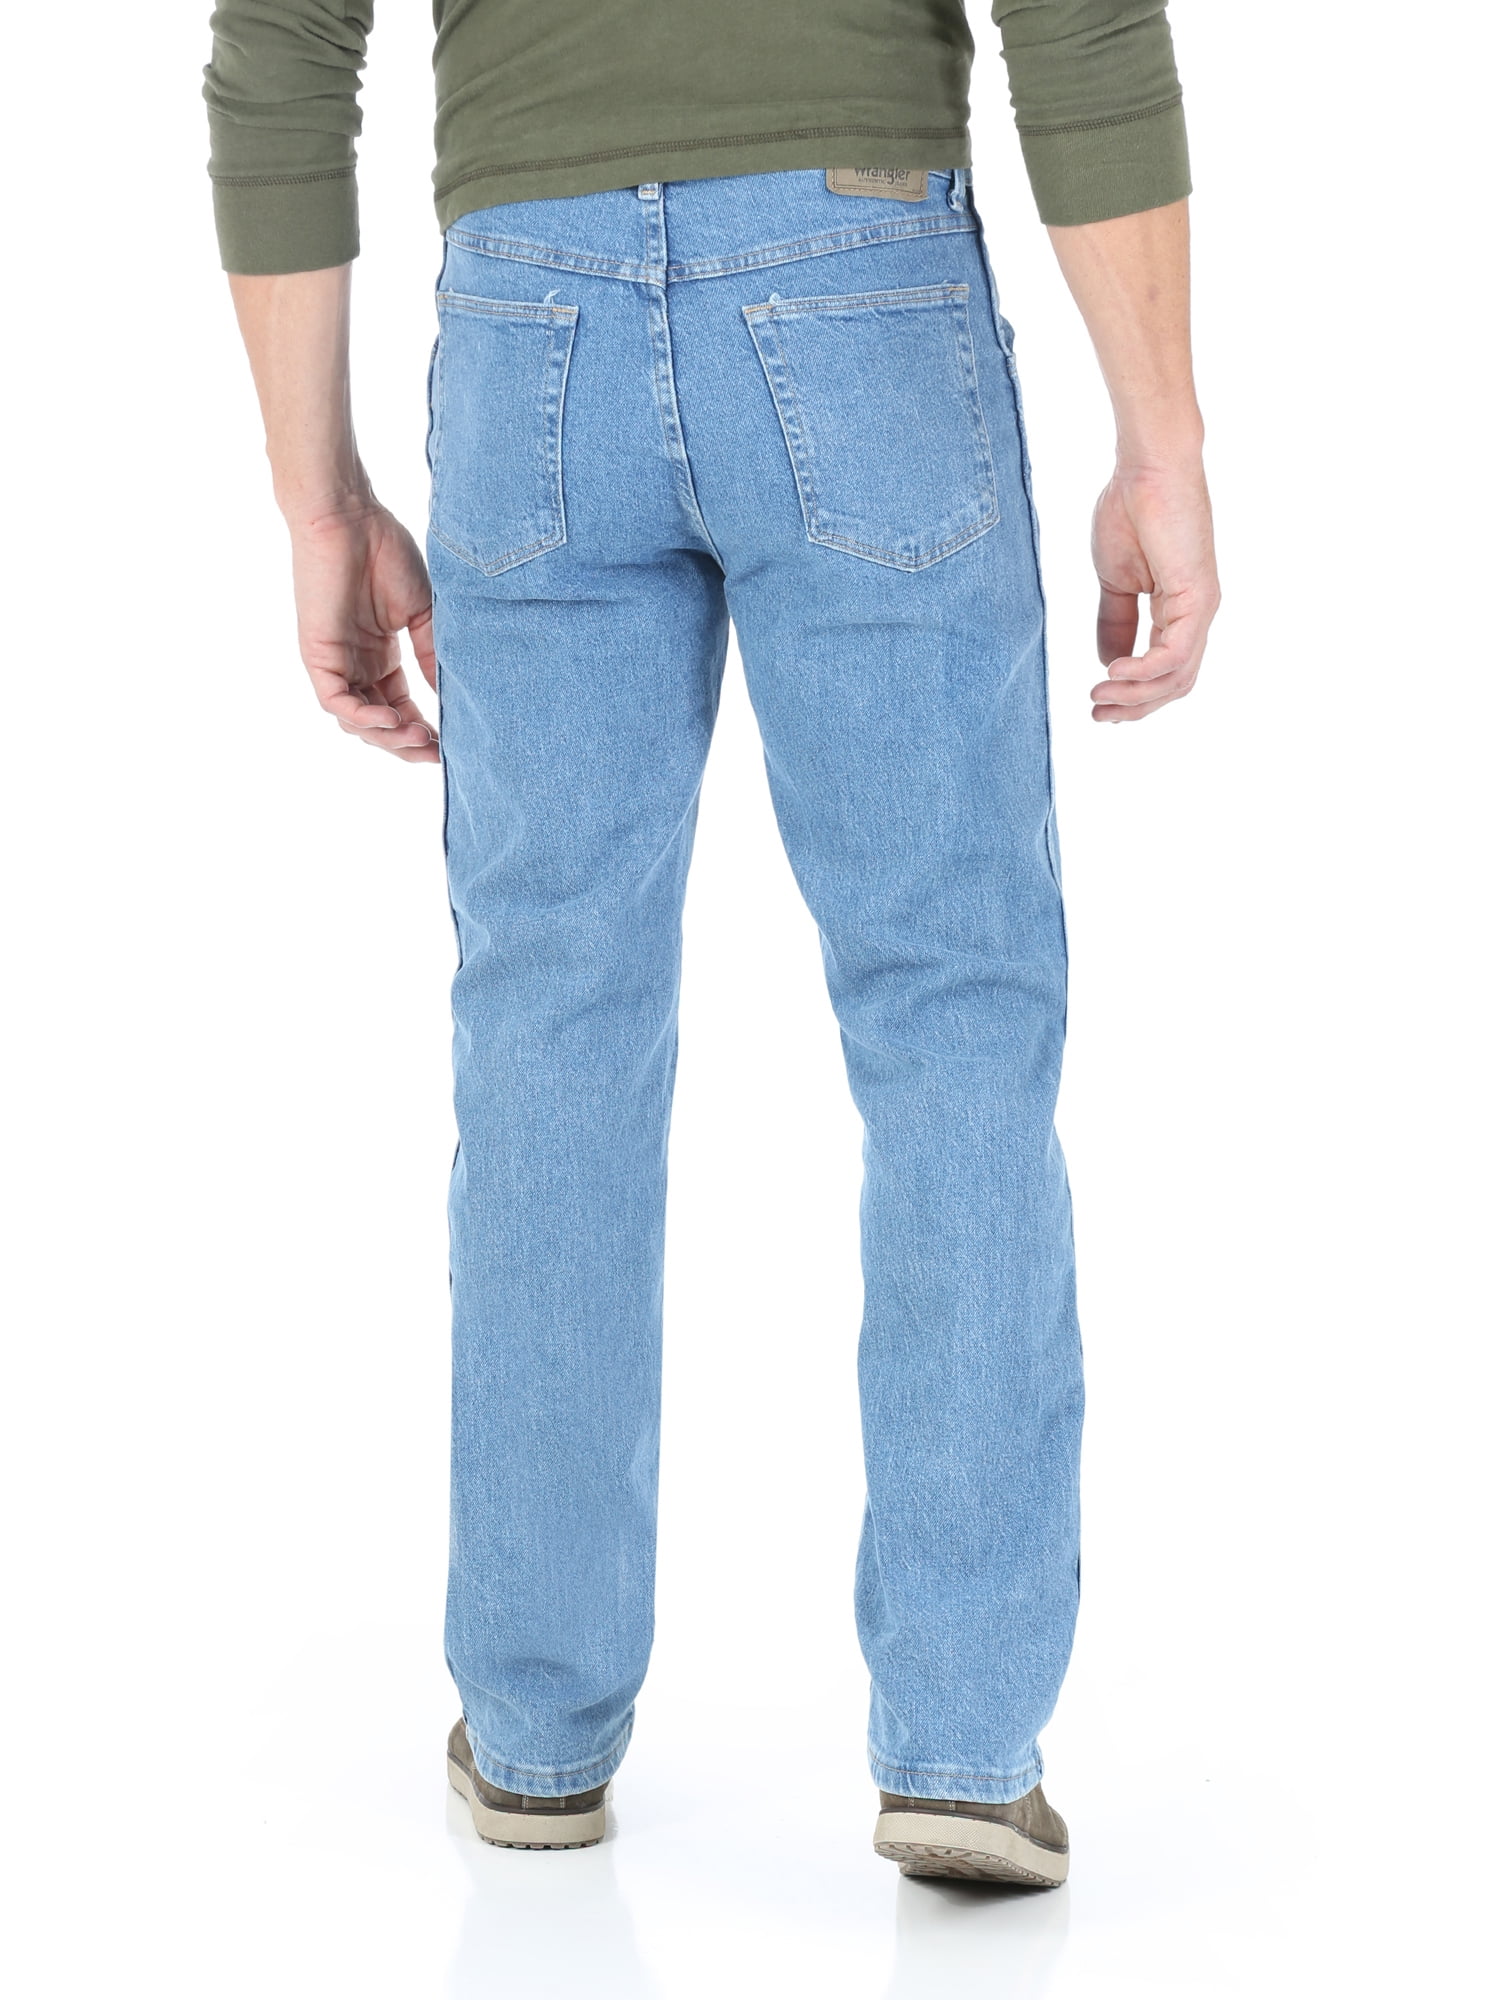 wrangler jeans 36 x 28